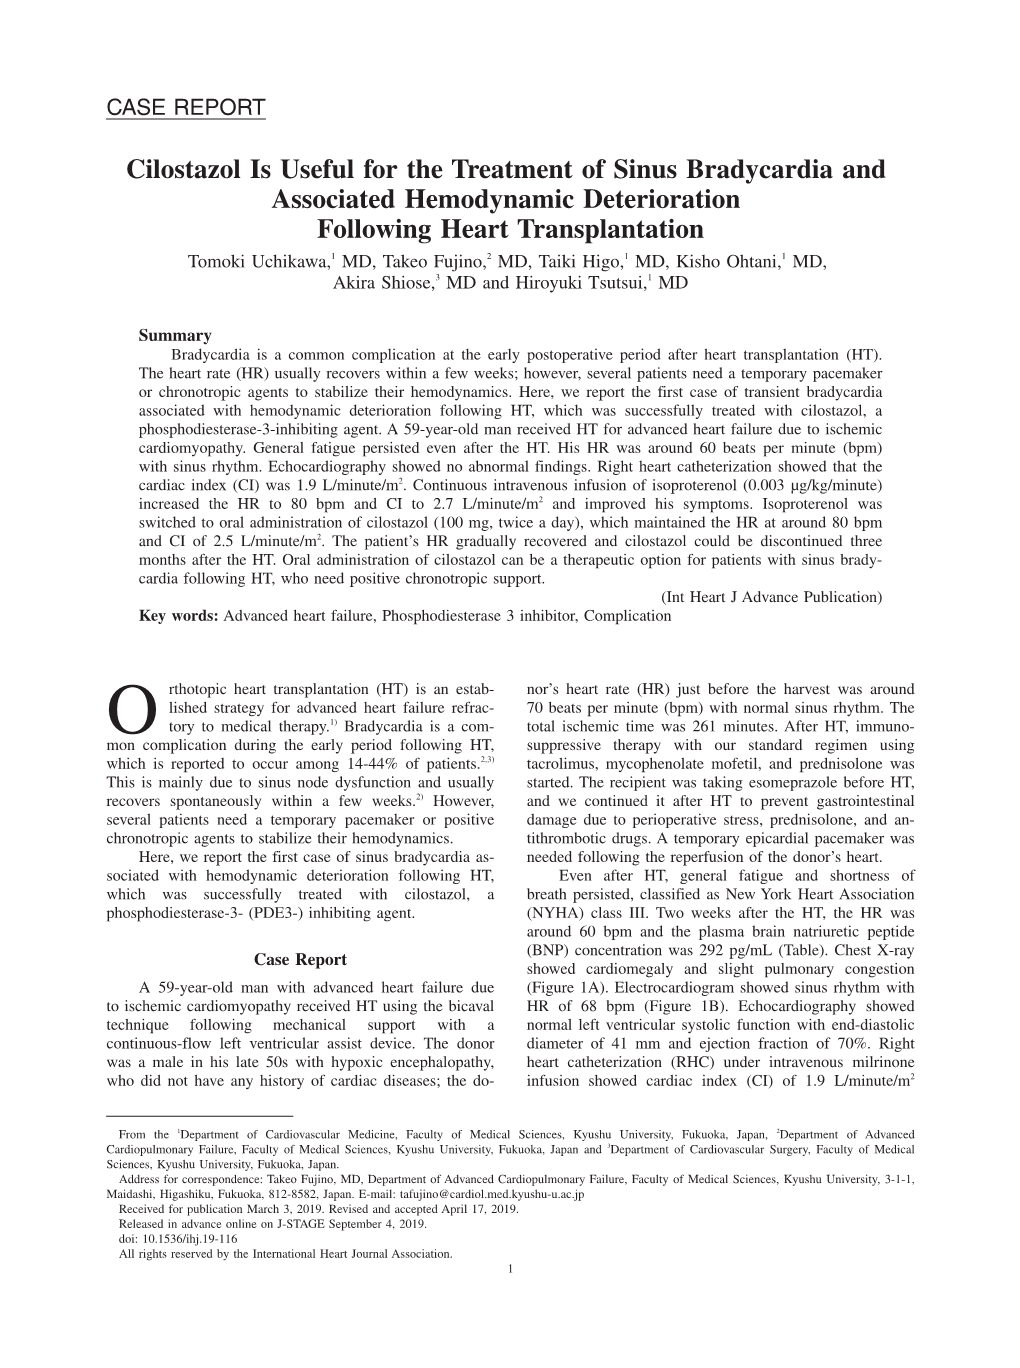 Cilostazol Is Useful for the Treatment of Sinus Bradycardia and Associated Hemodynamic Deterioration Following Heart Transplanta